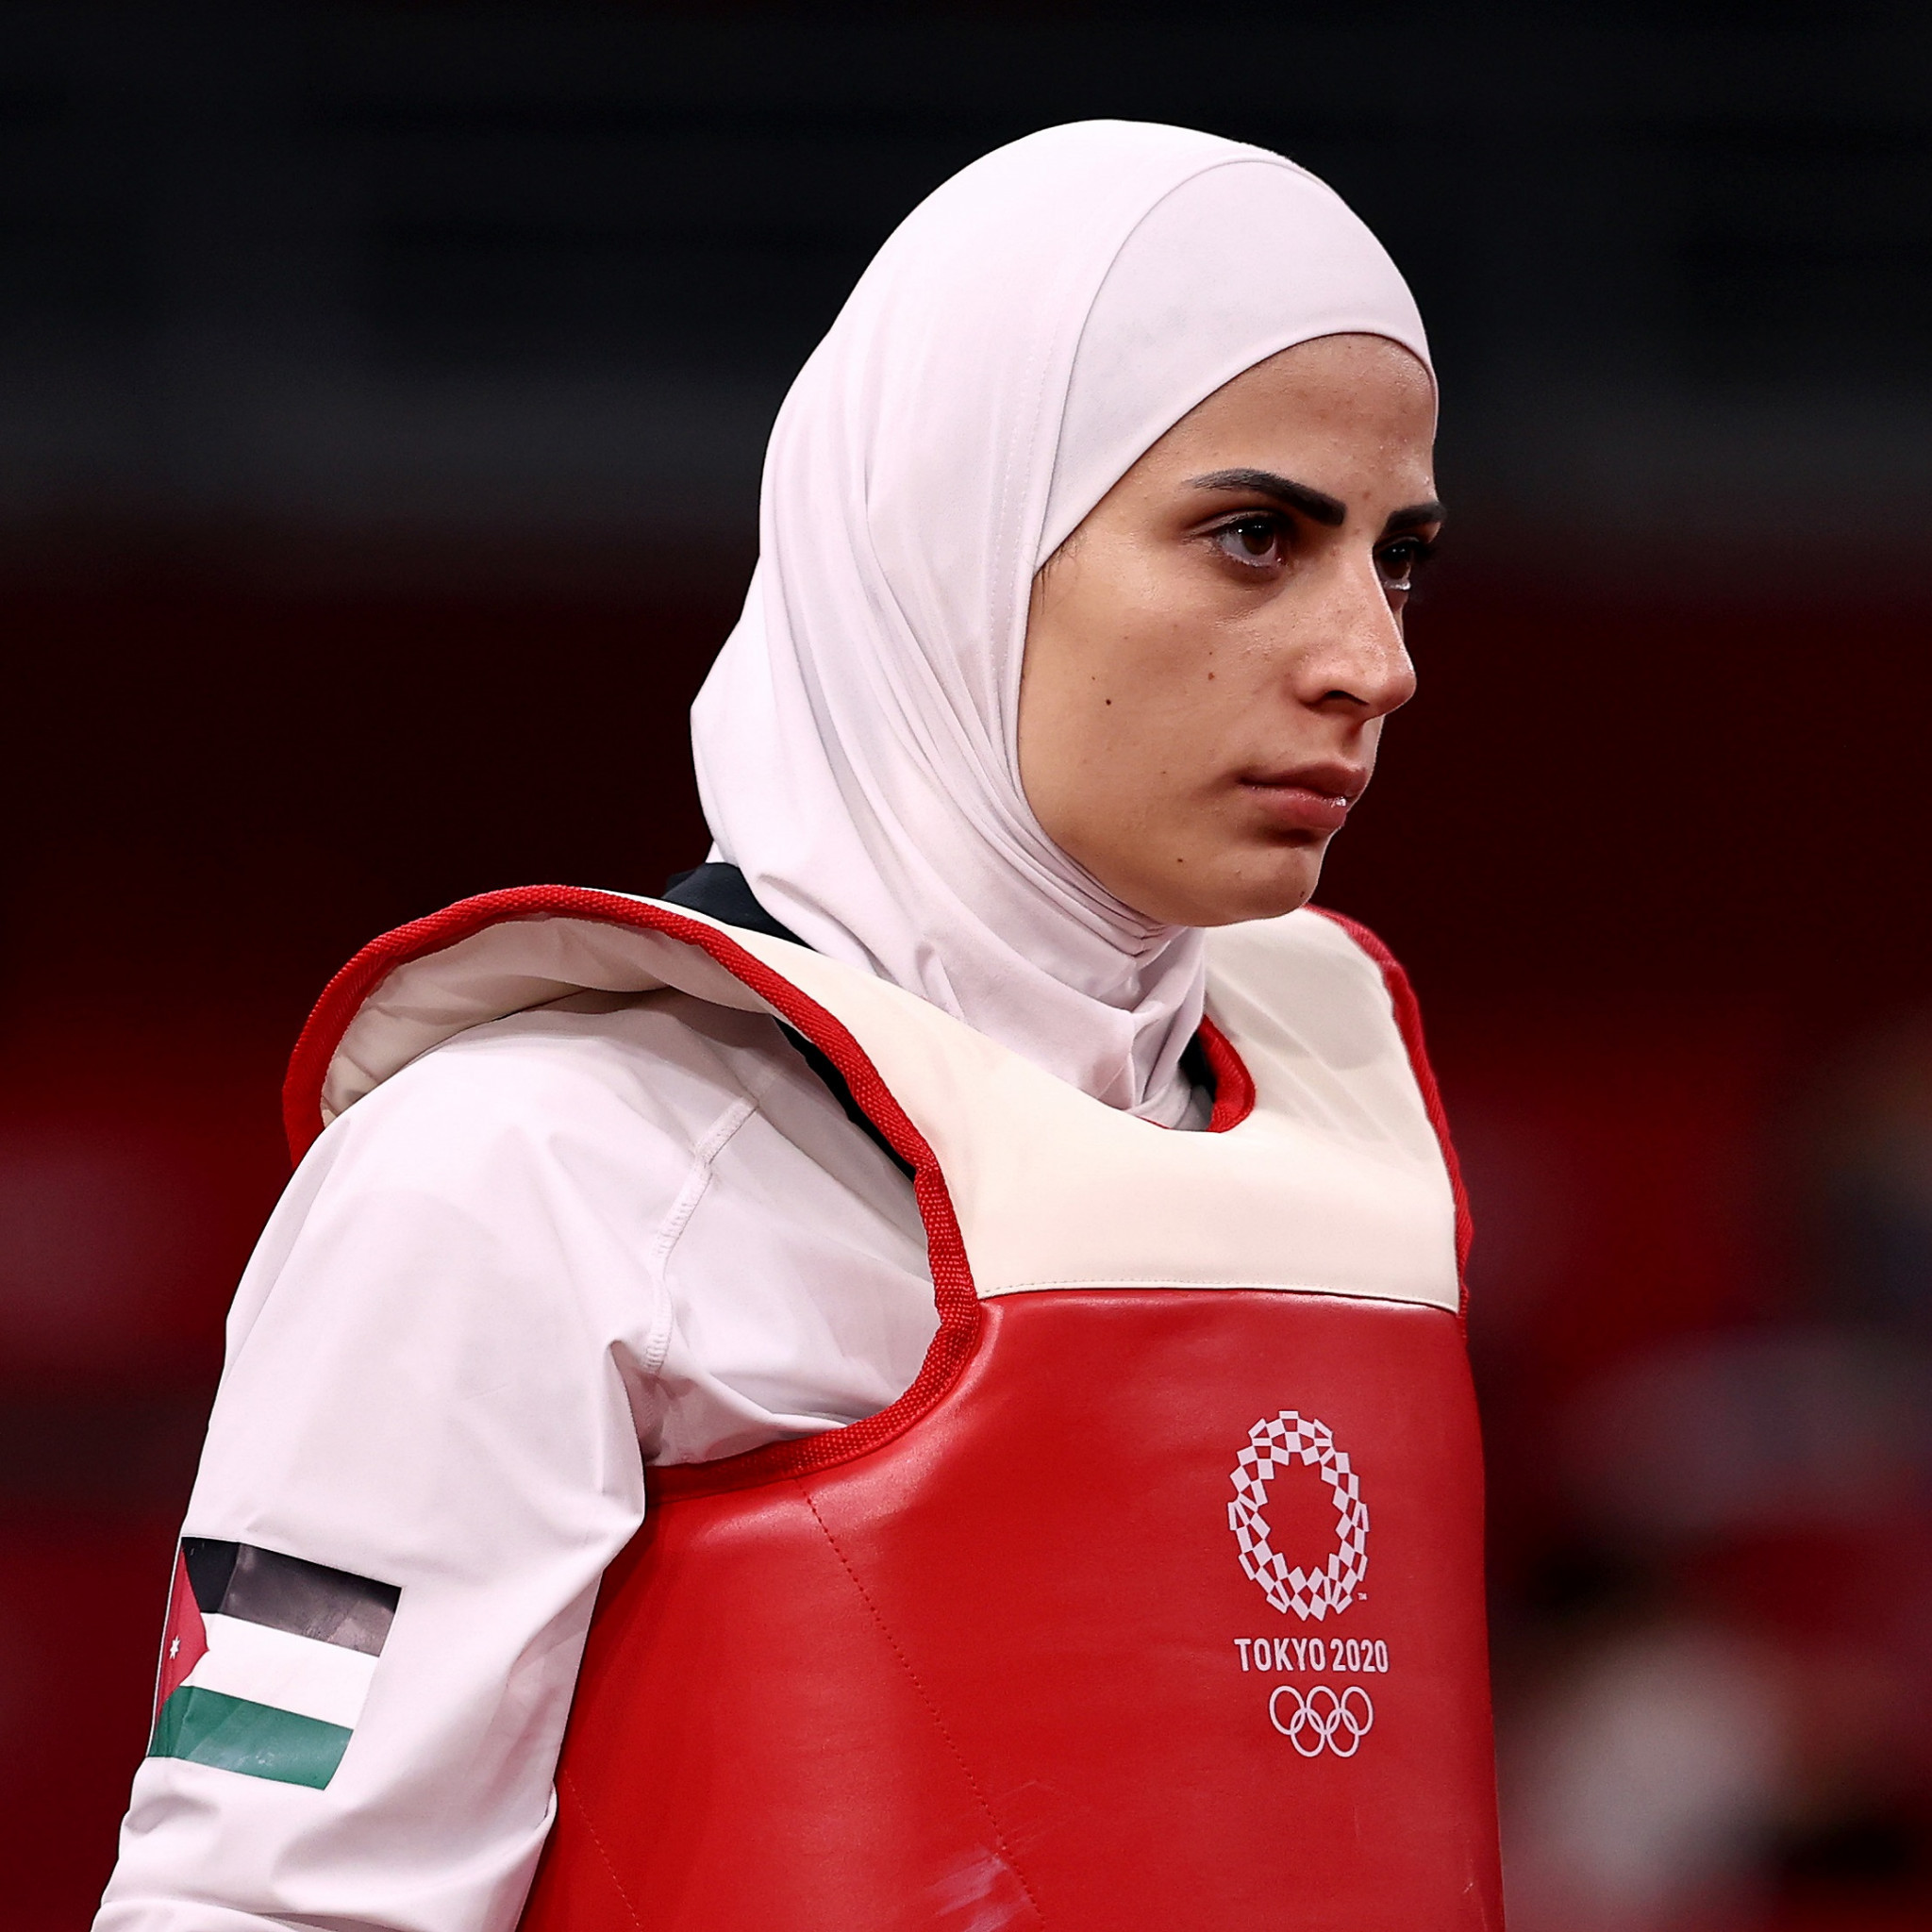 Julyana Al-Sadeq - Making a mark for Arab and Muslim women